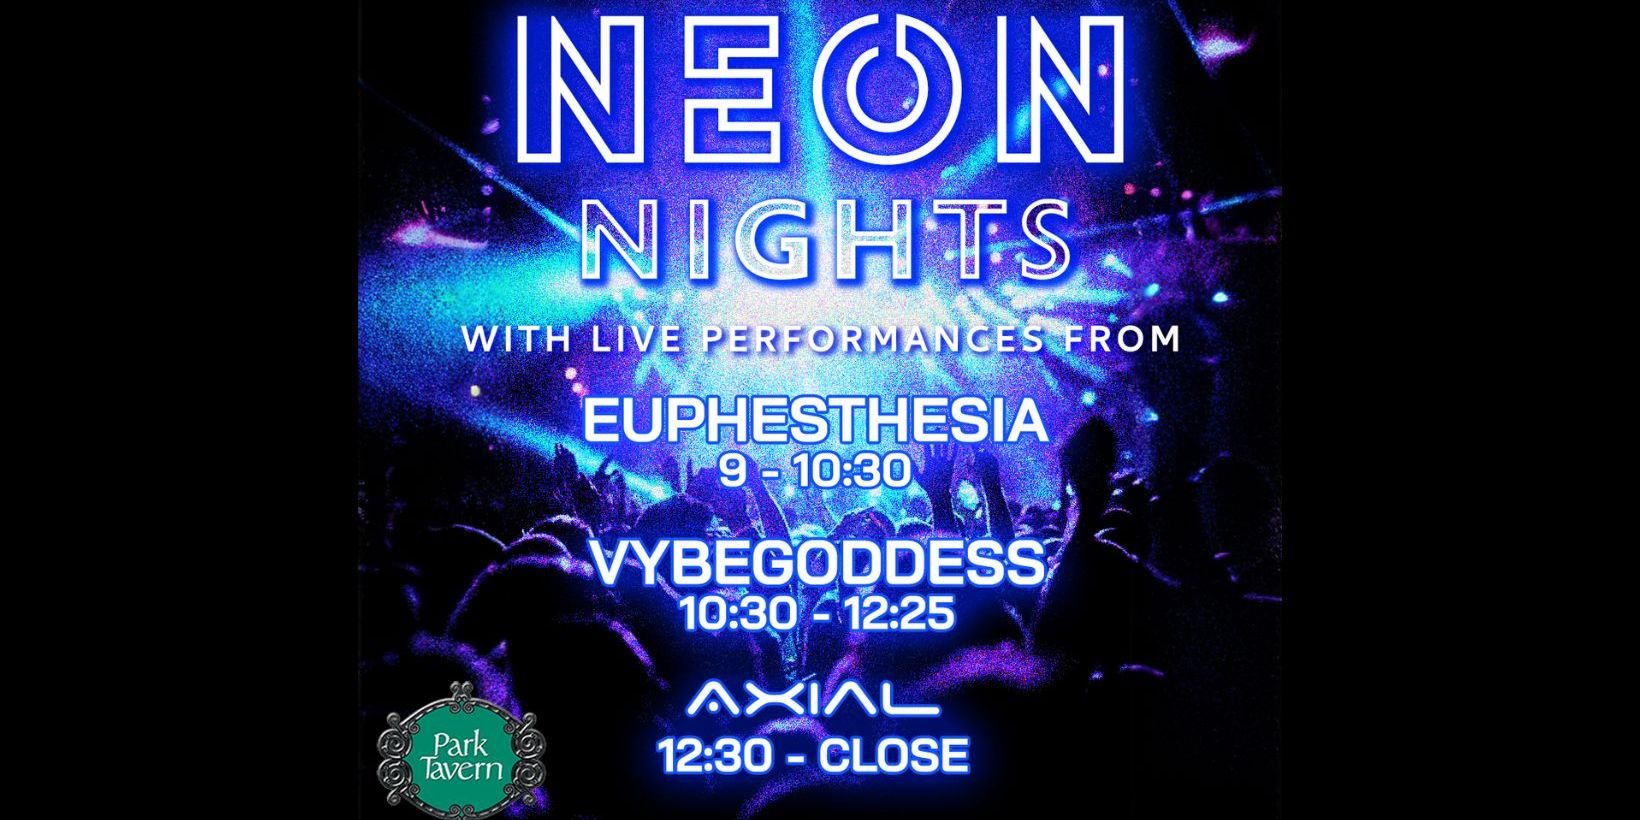 Neon Nights FREE DJ Dance Party With DJ Euphesthesia, DJ VybeGoddess, & DJ Axial promotional image